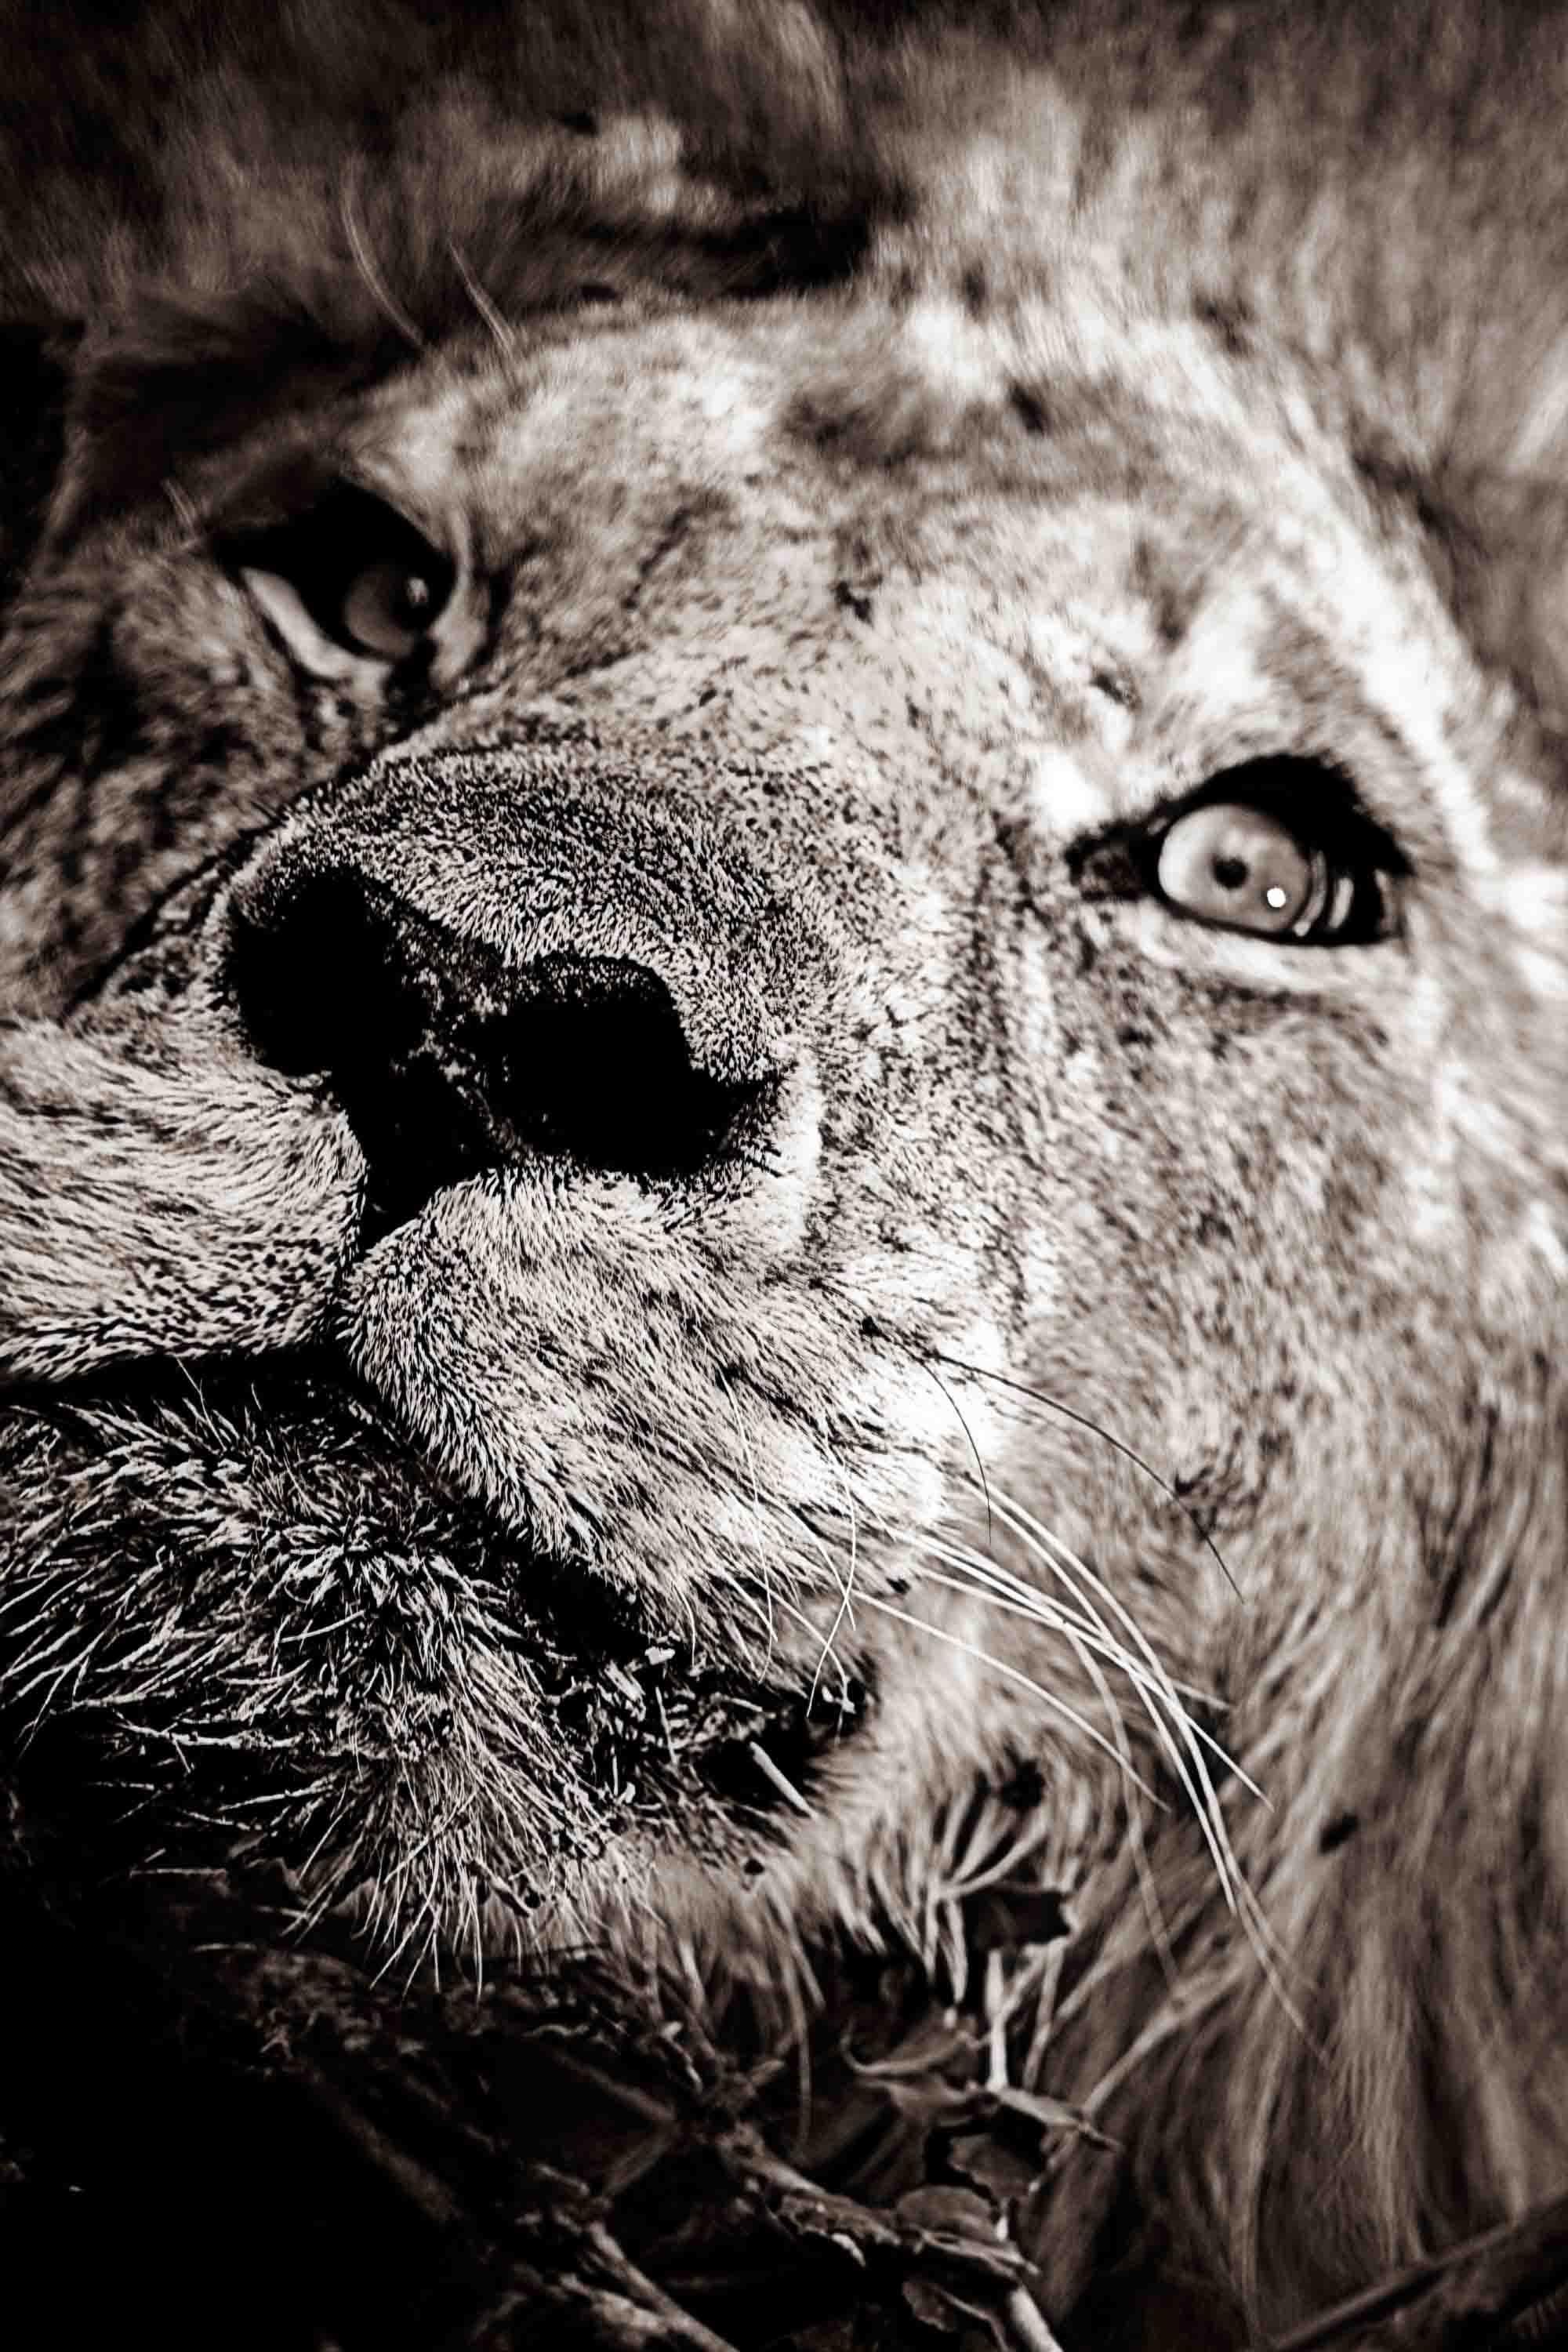 Awaken - Michel Ghatan, lion, wildlife, black and white, photo, kenya, 36x24 in.